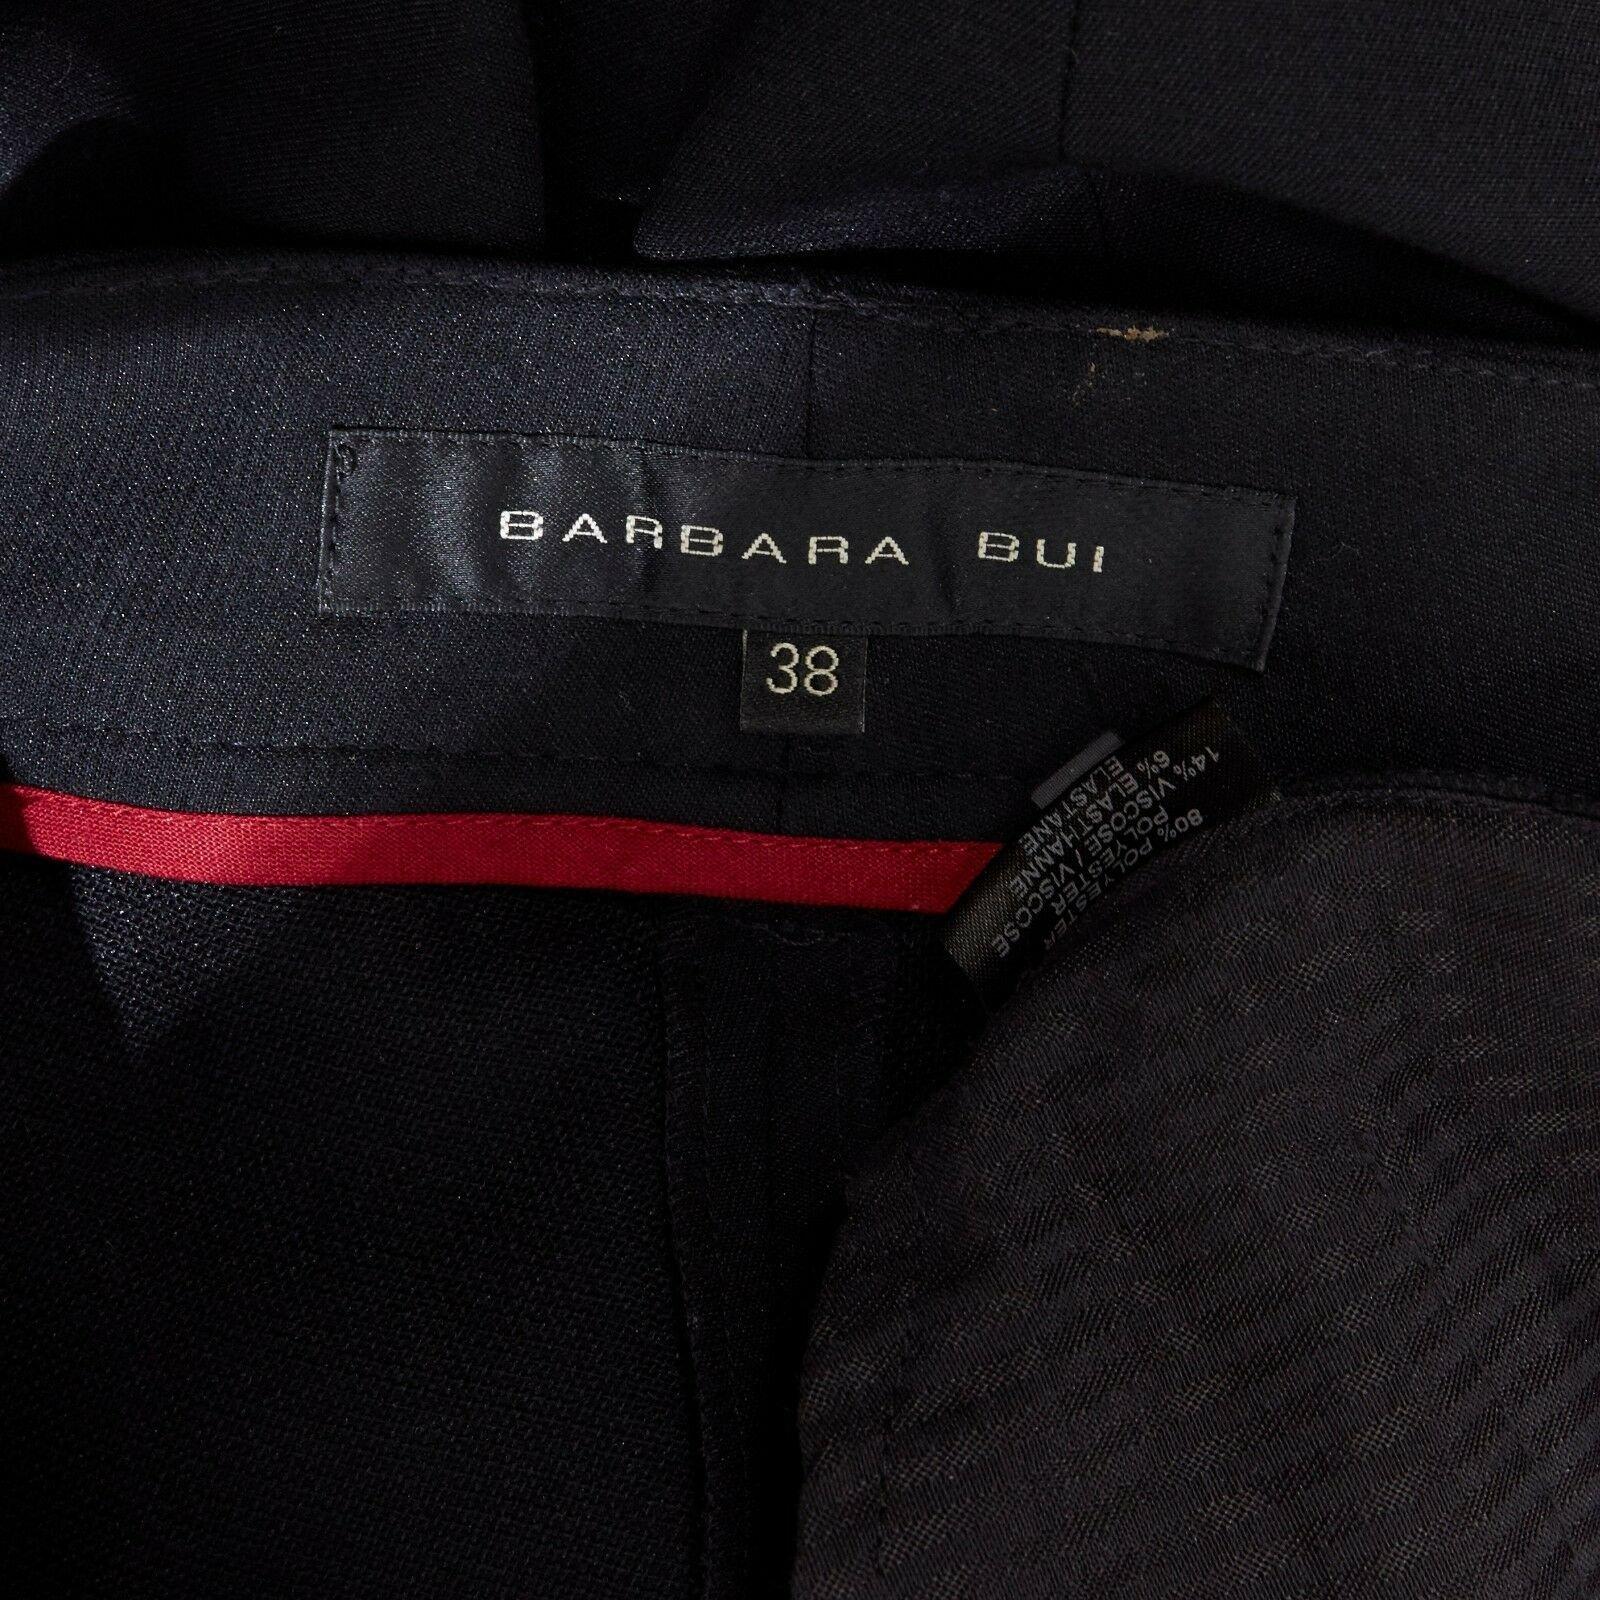 BARBARA BUI polyester blend black pleat front dual pocket skinny pants FR38 XS 4